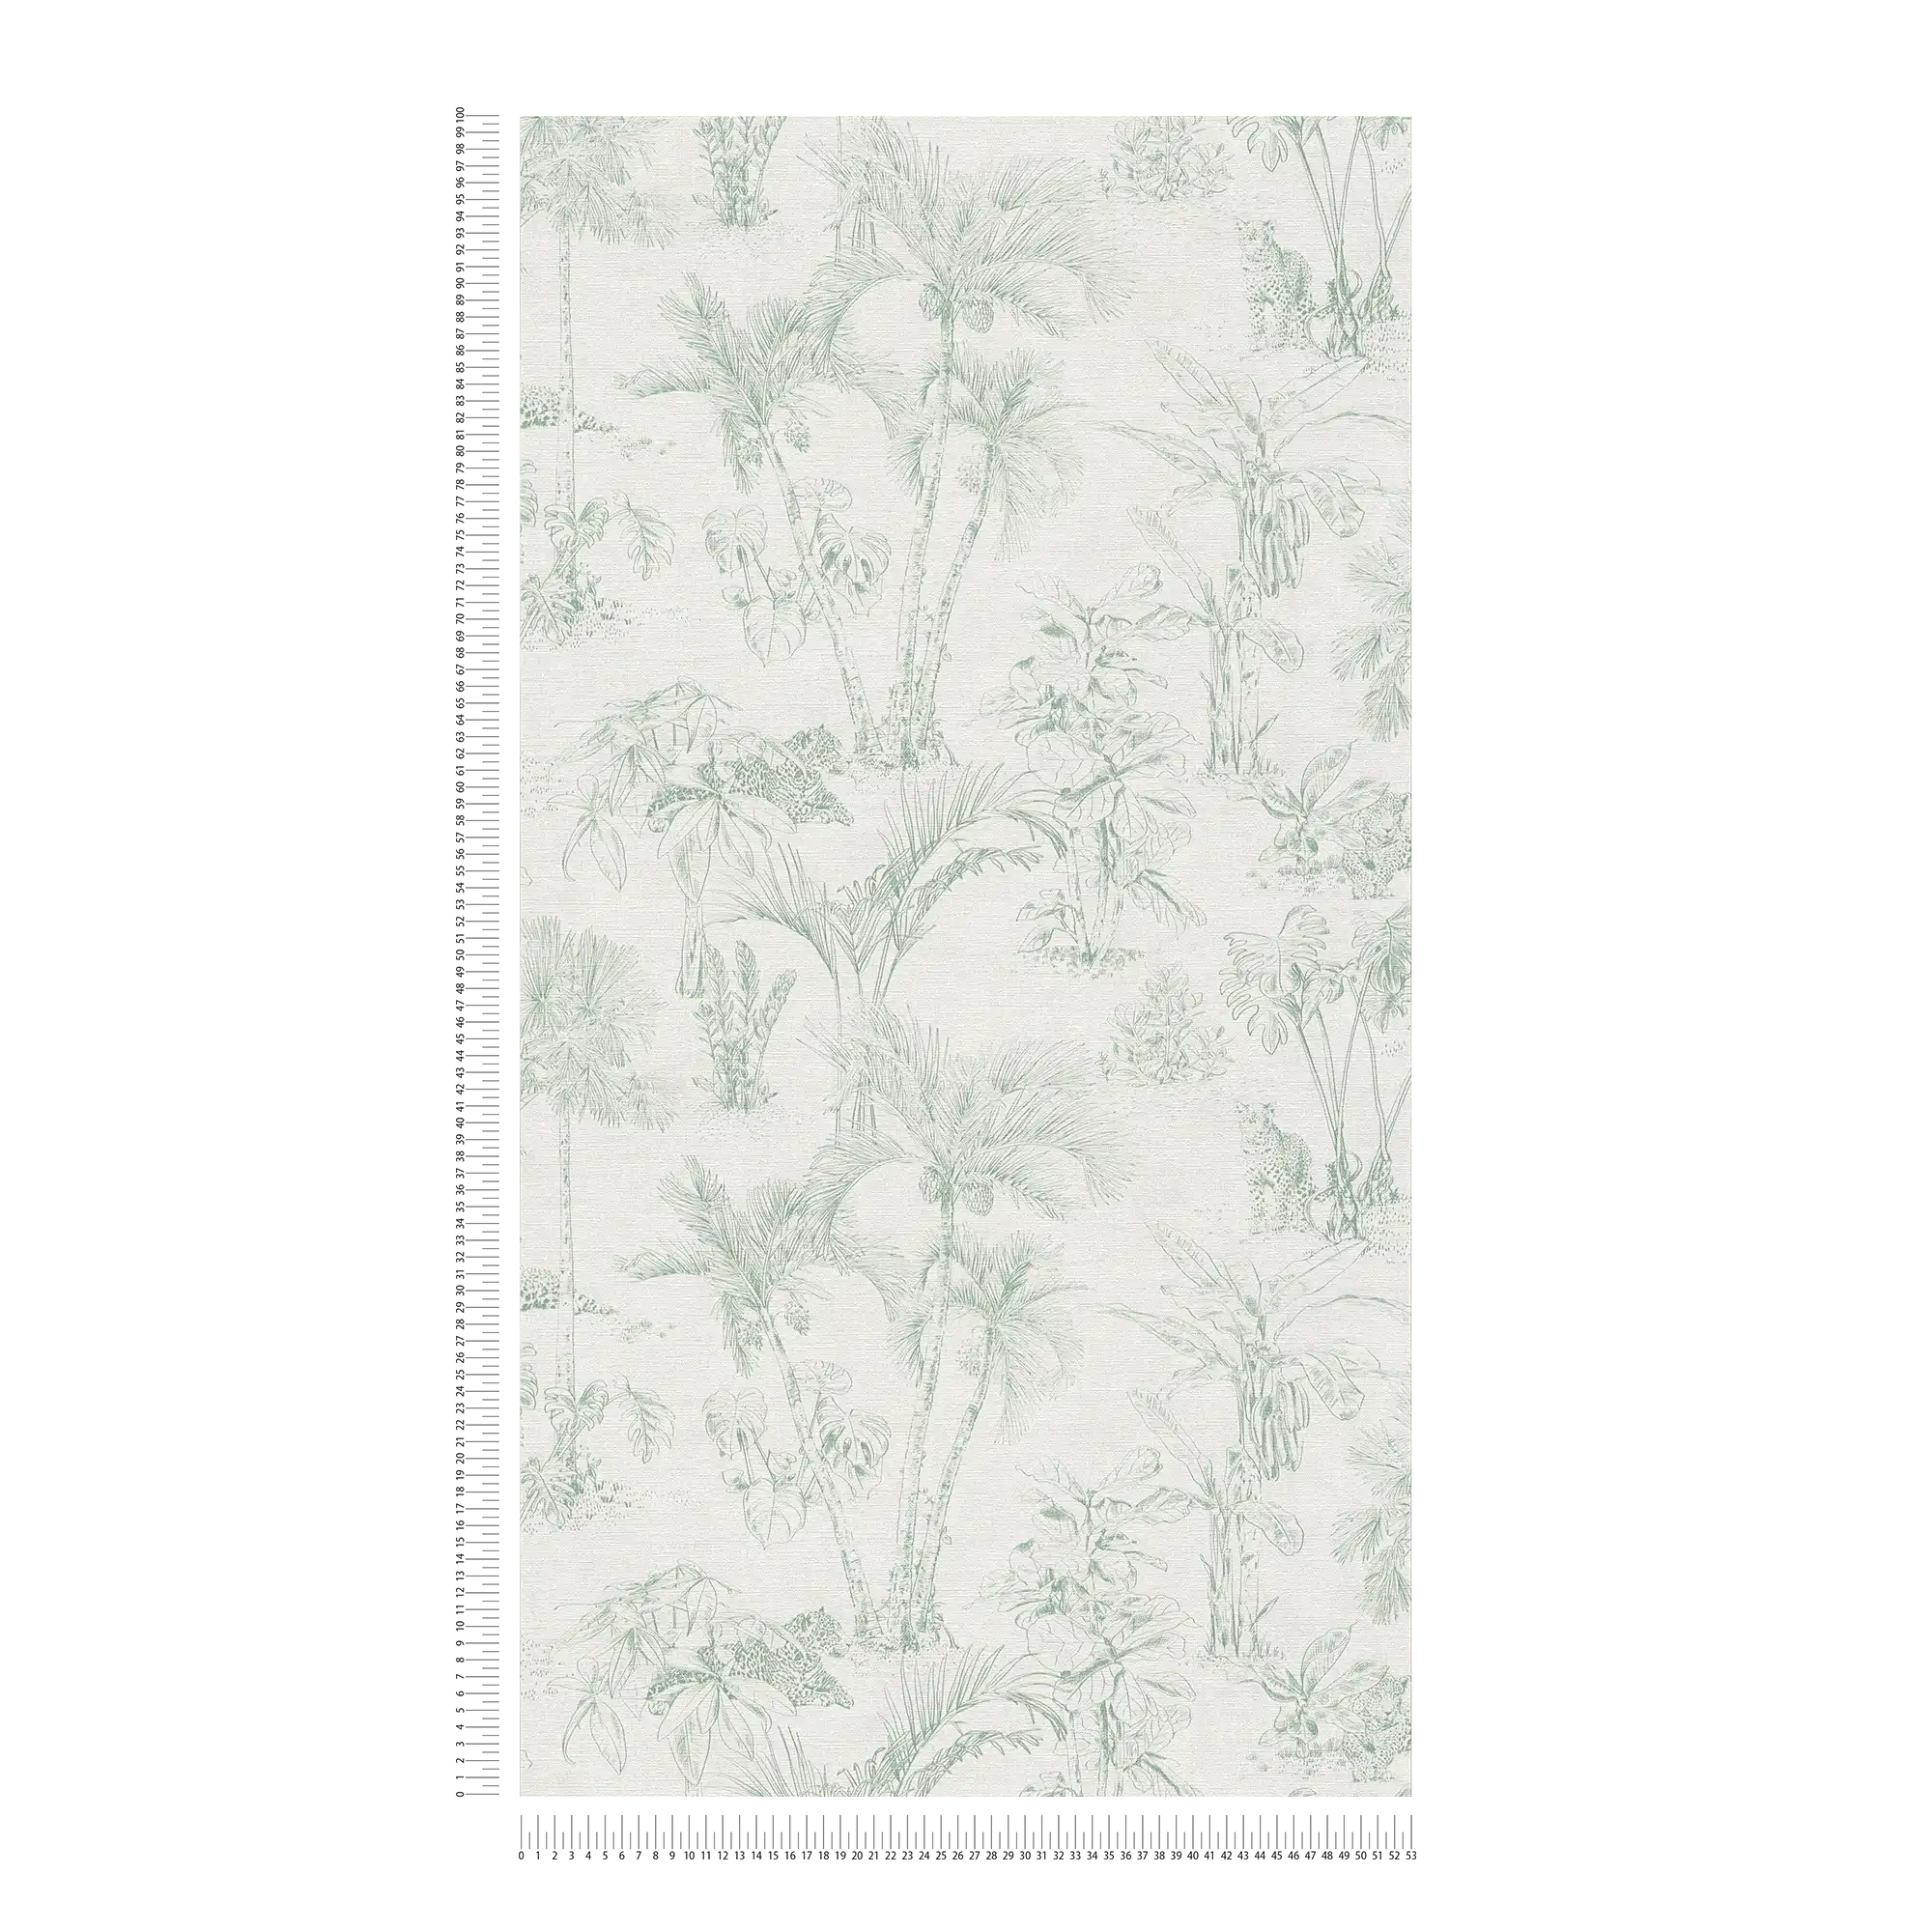             Linen optics wallpaper jungle design with palm trees - grey, green
        